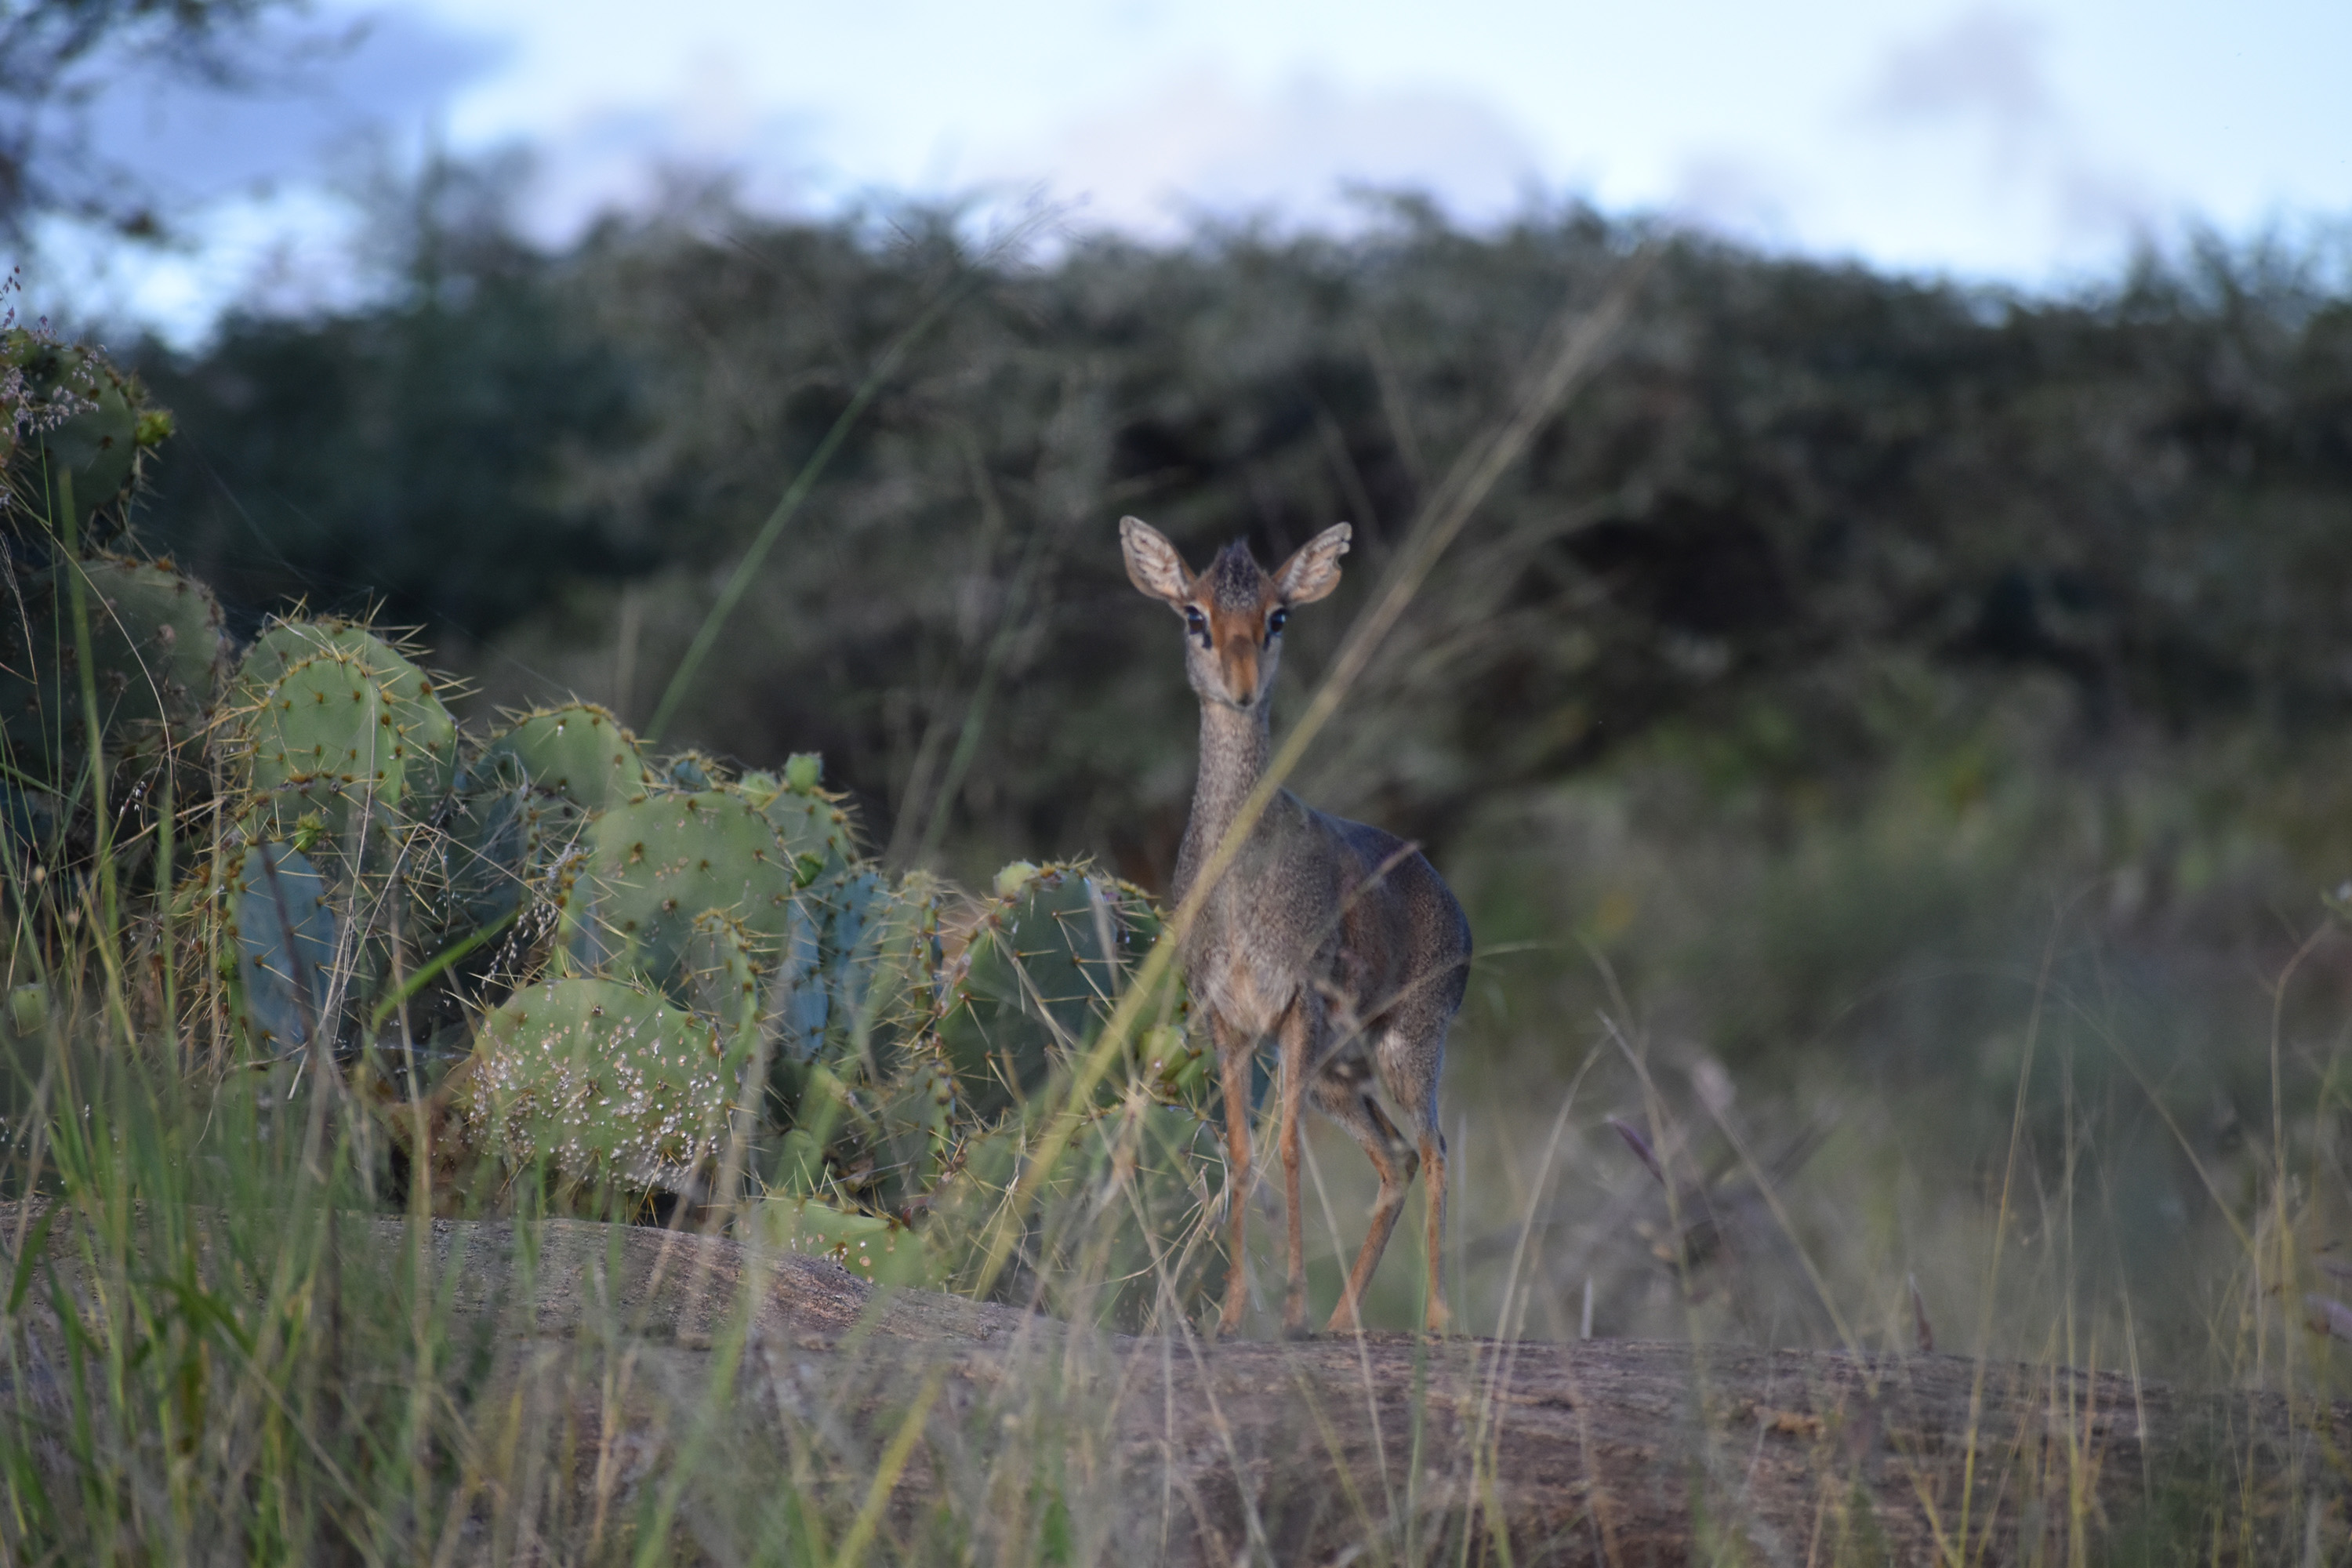 A dik-dik, among Kenya’s smallest antelopes